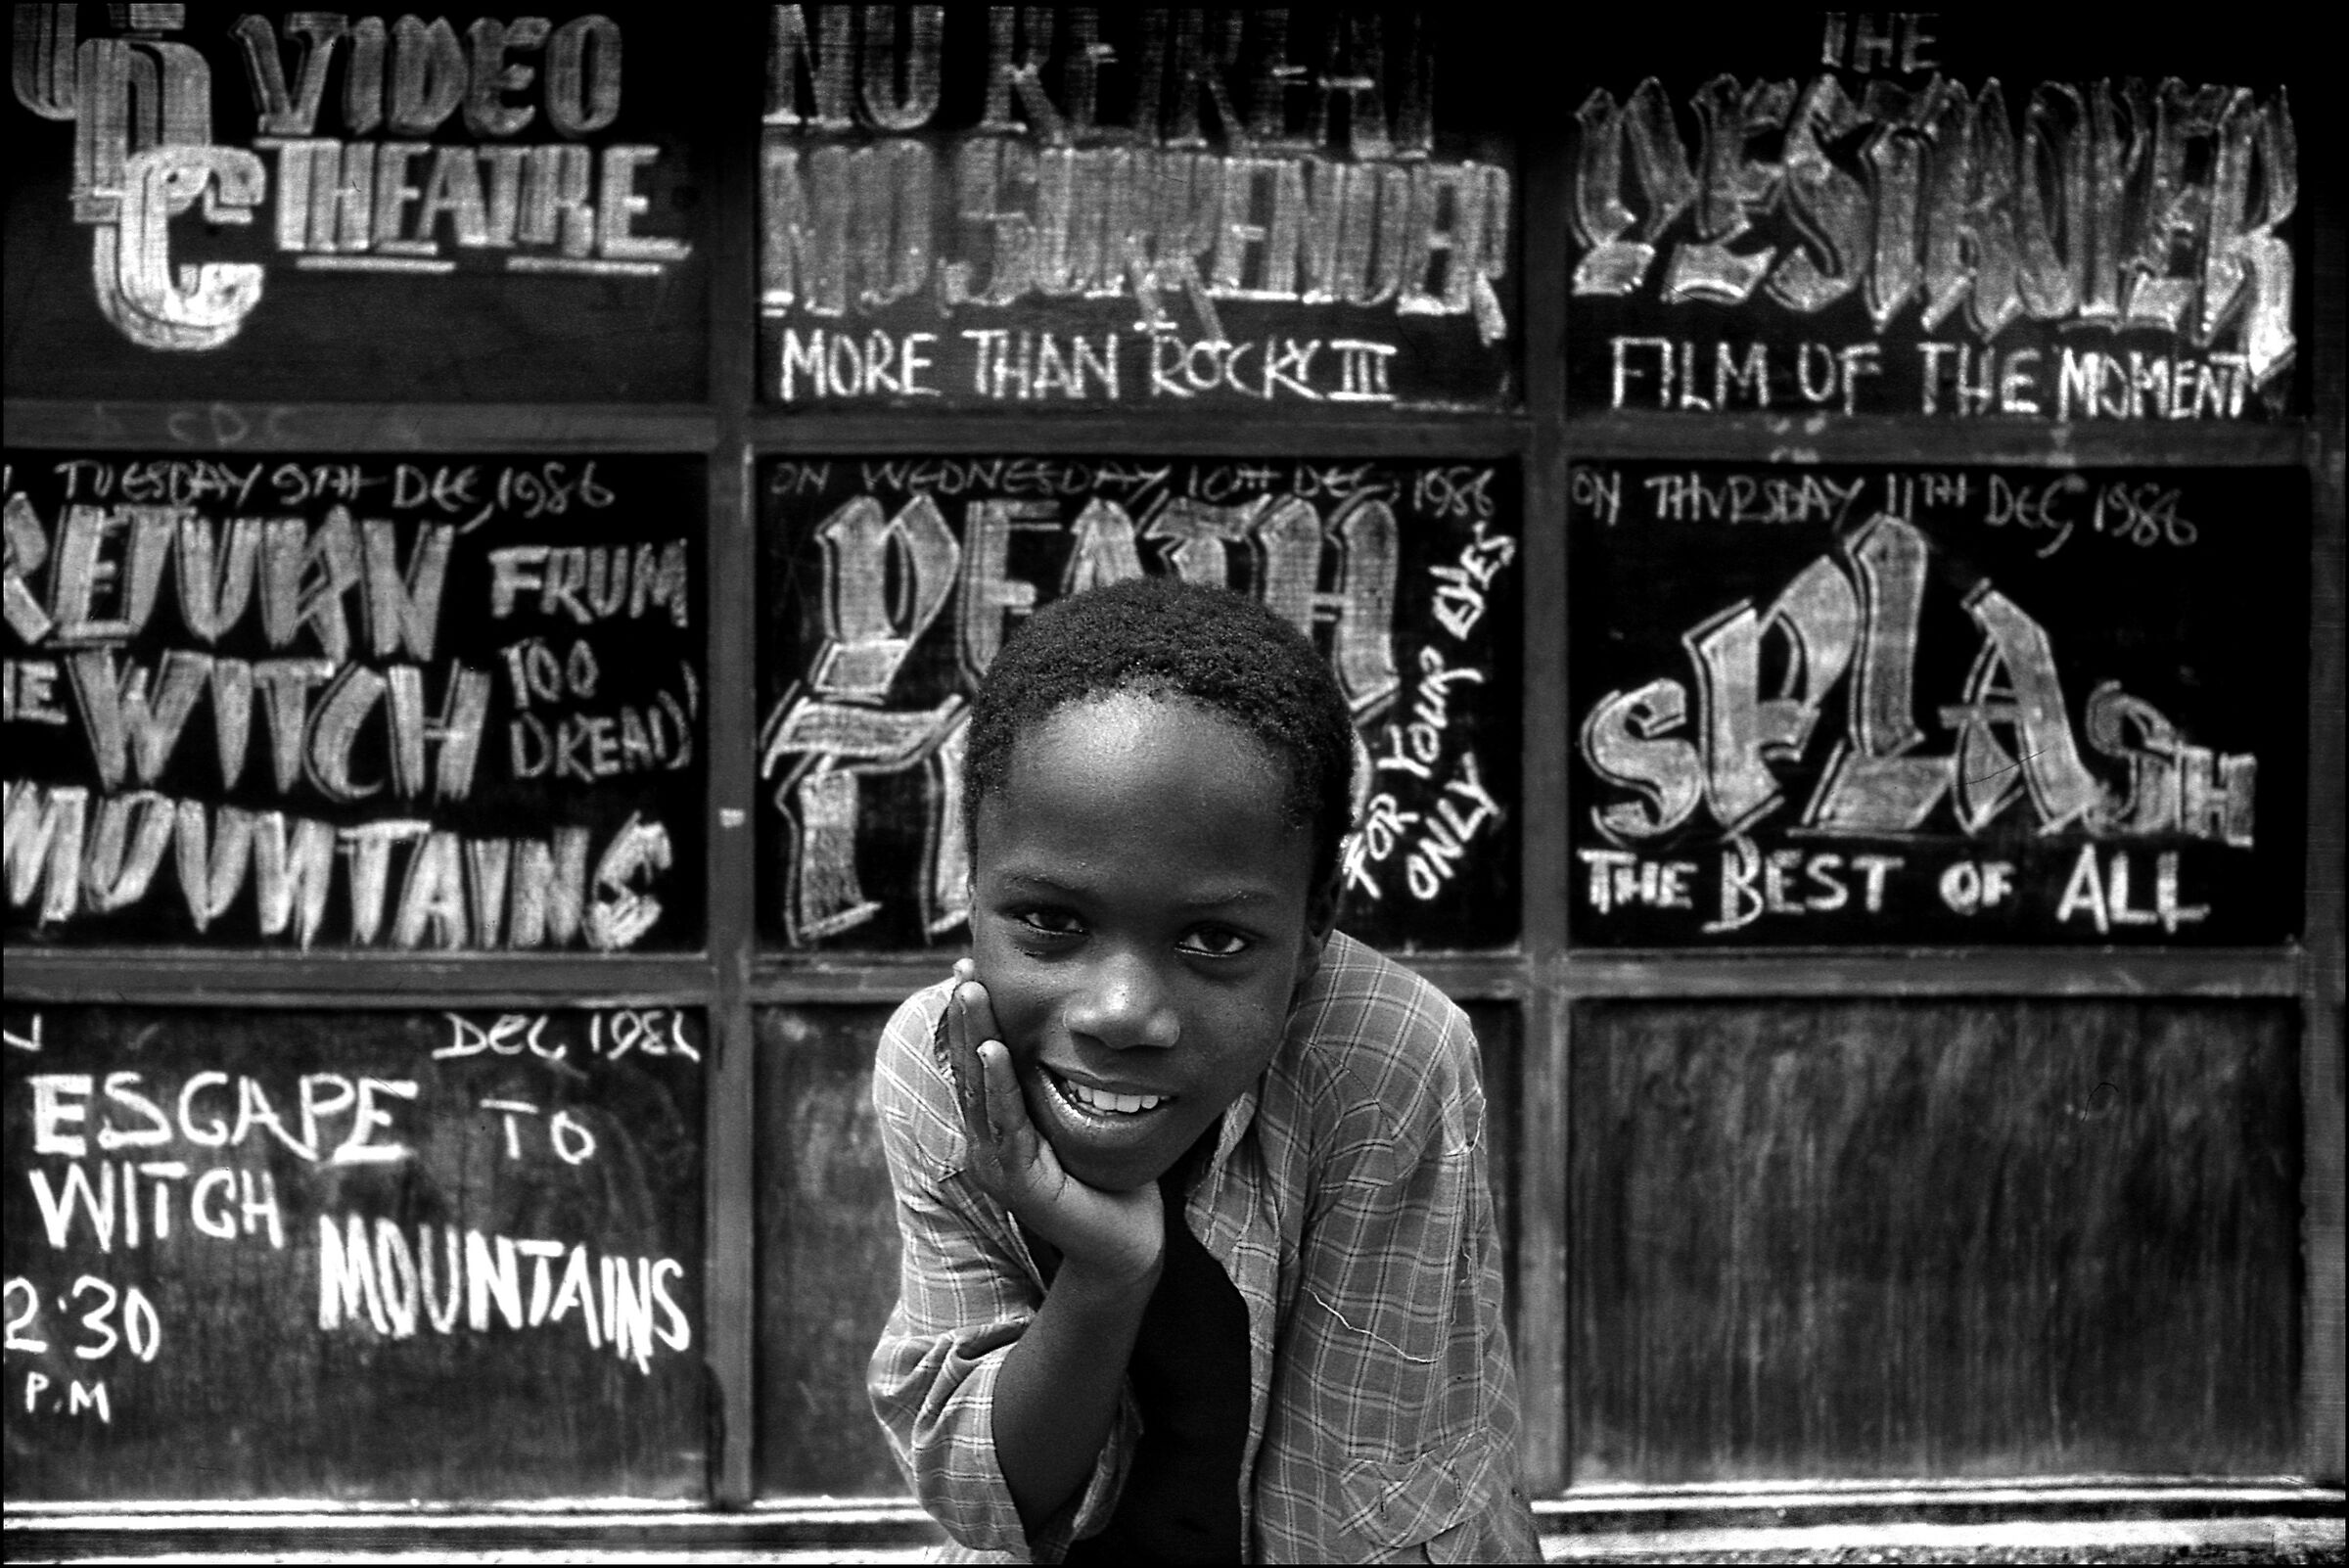 1986 - Burkina Faso "al cinema"...